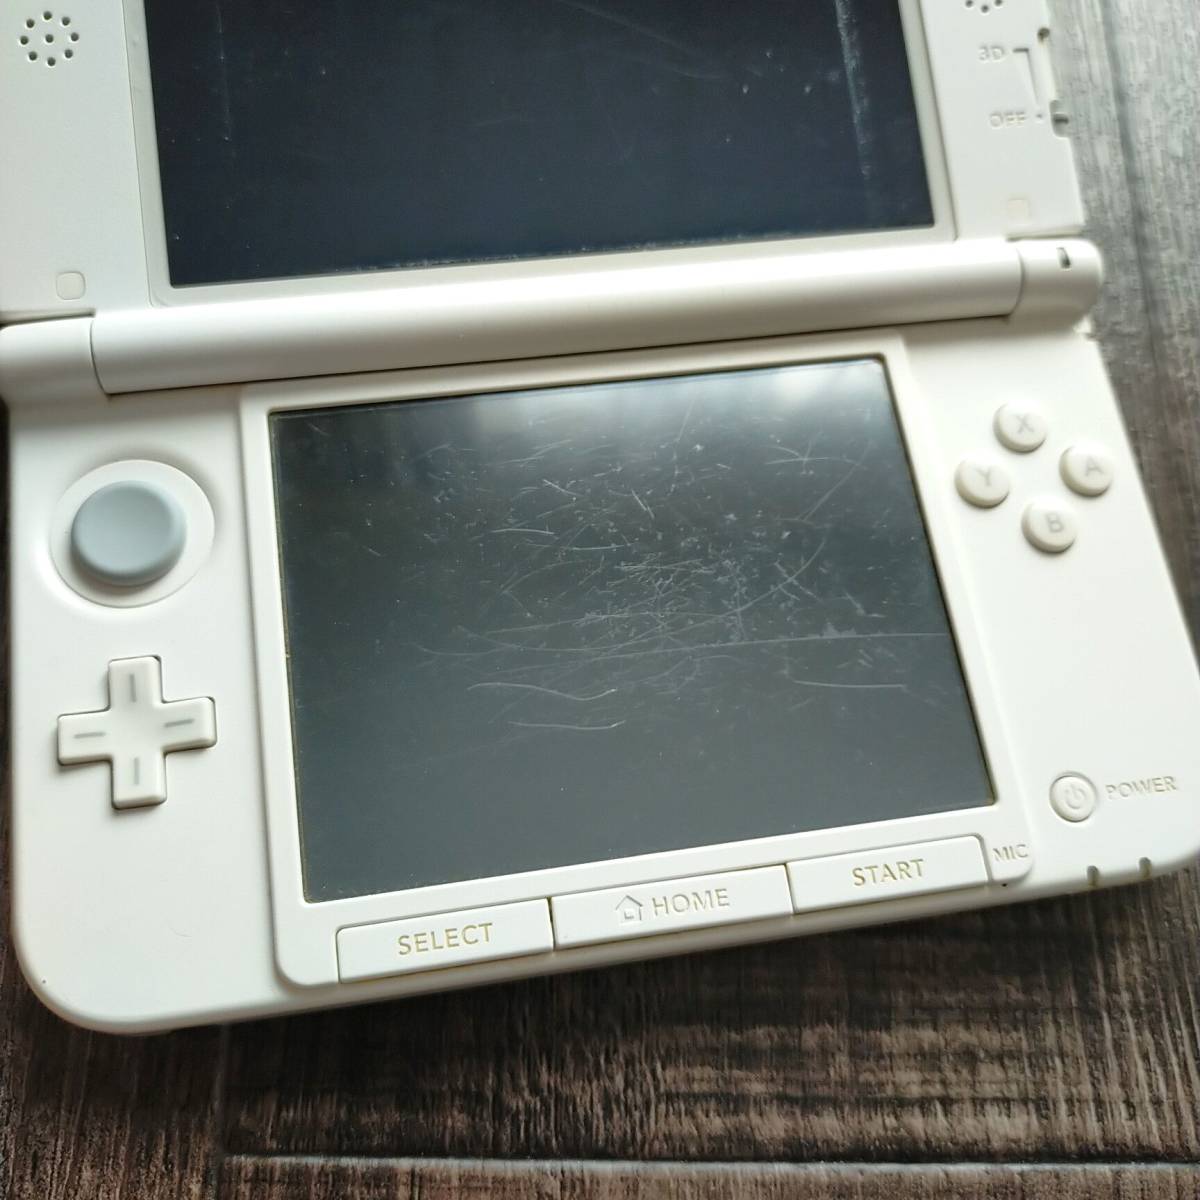 3dsll 本体 ホワイト 白 NINTENDO 3DS LL 中古 任天堂 送料無料 動作